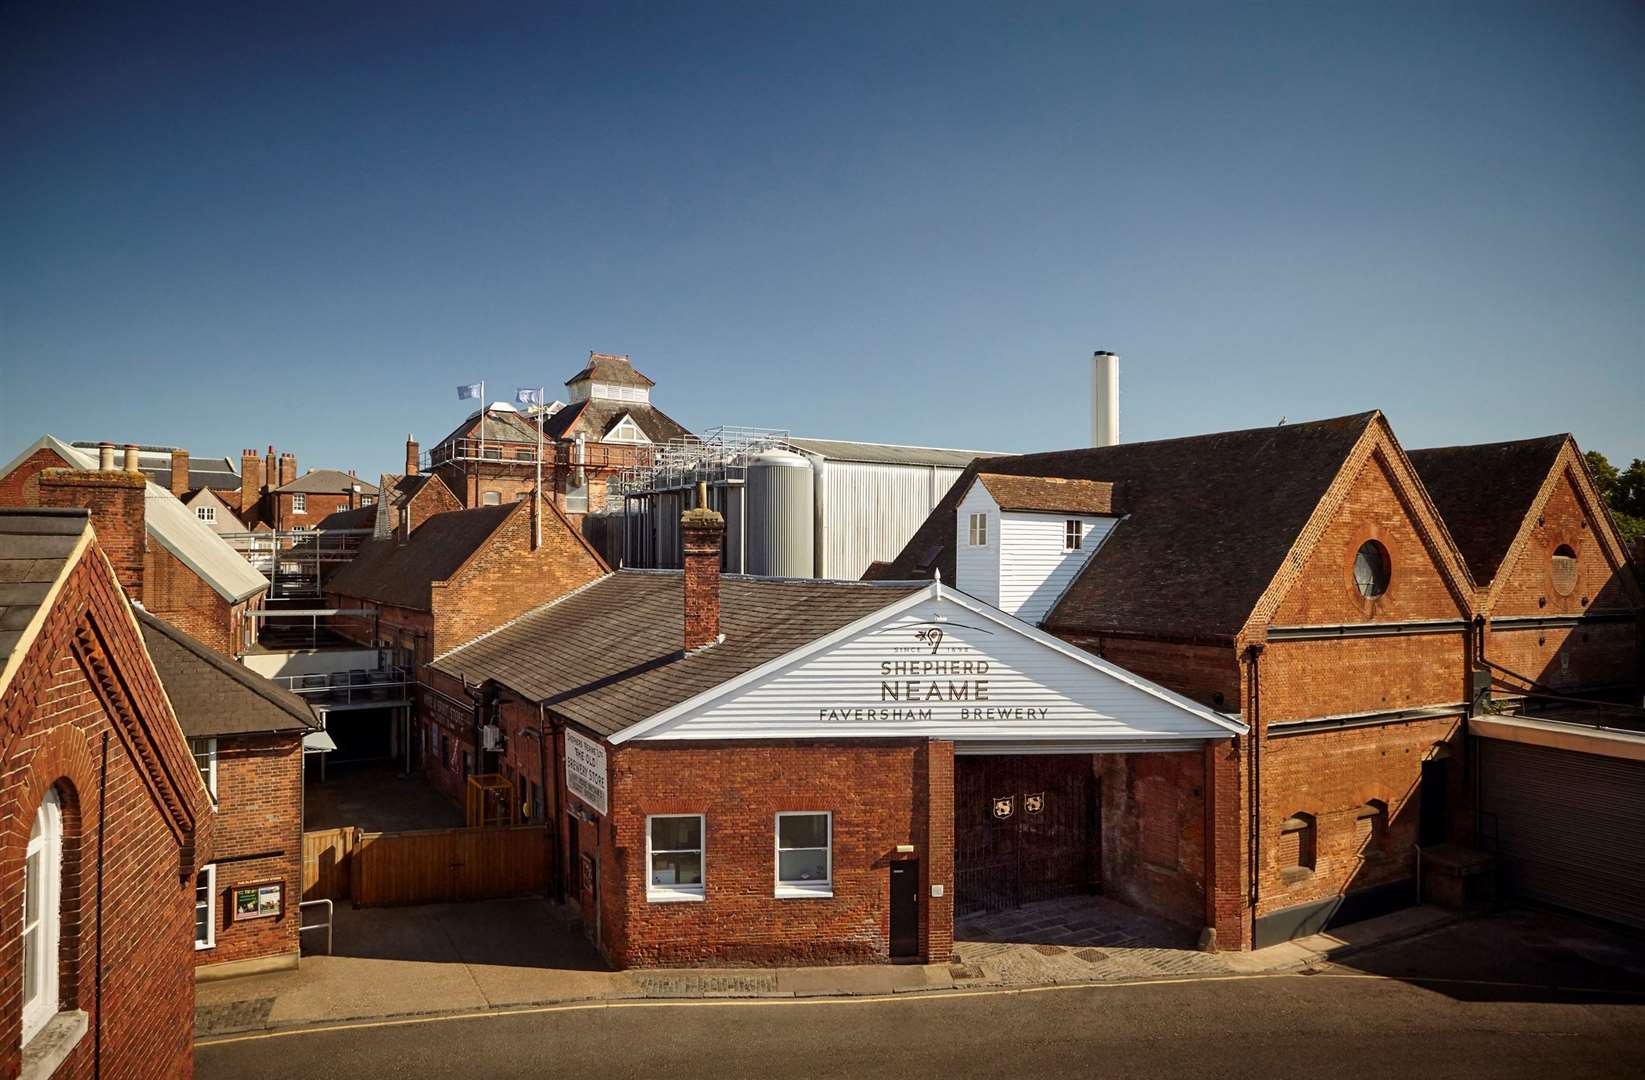 The Shepherd Neame Brewery in Faversham